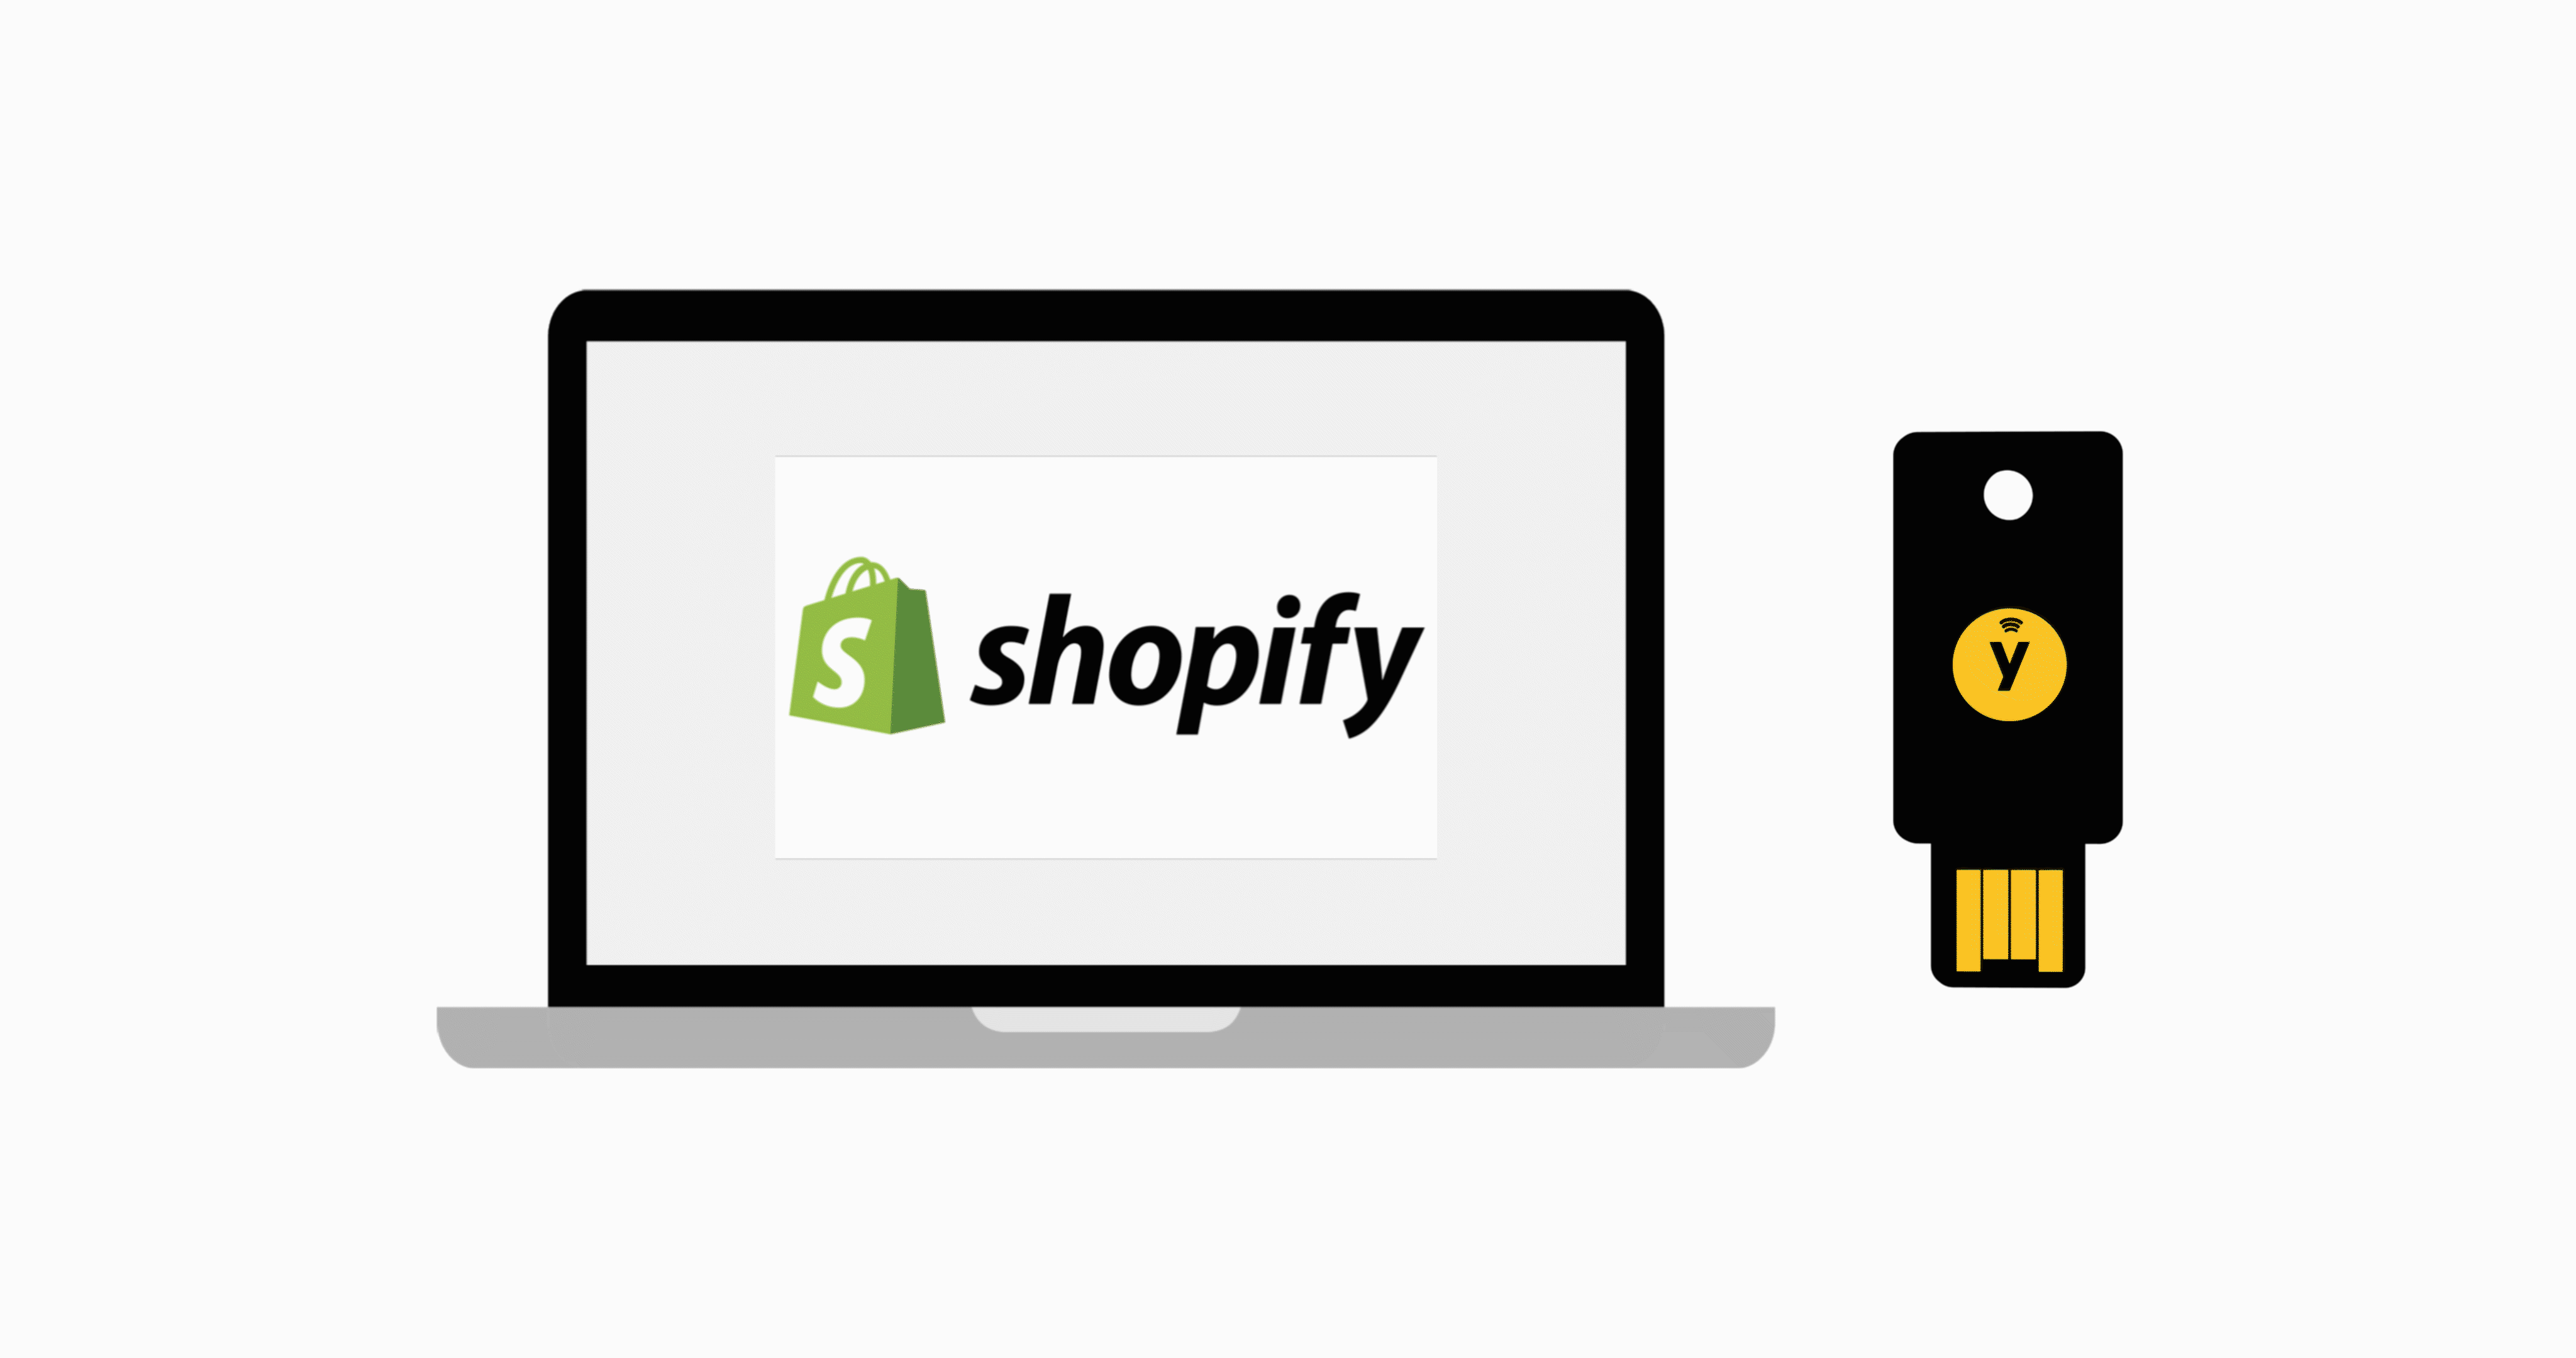 Shopify main image